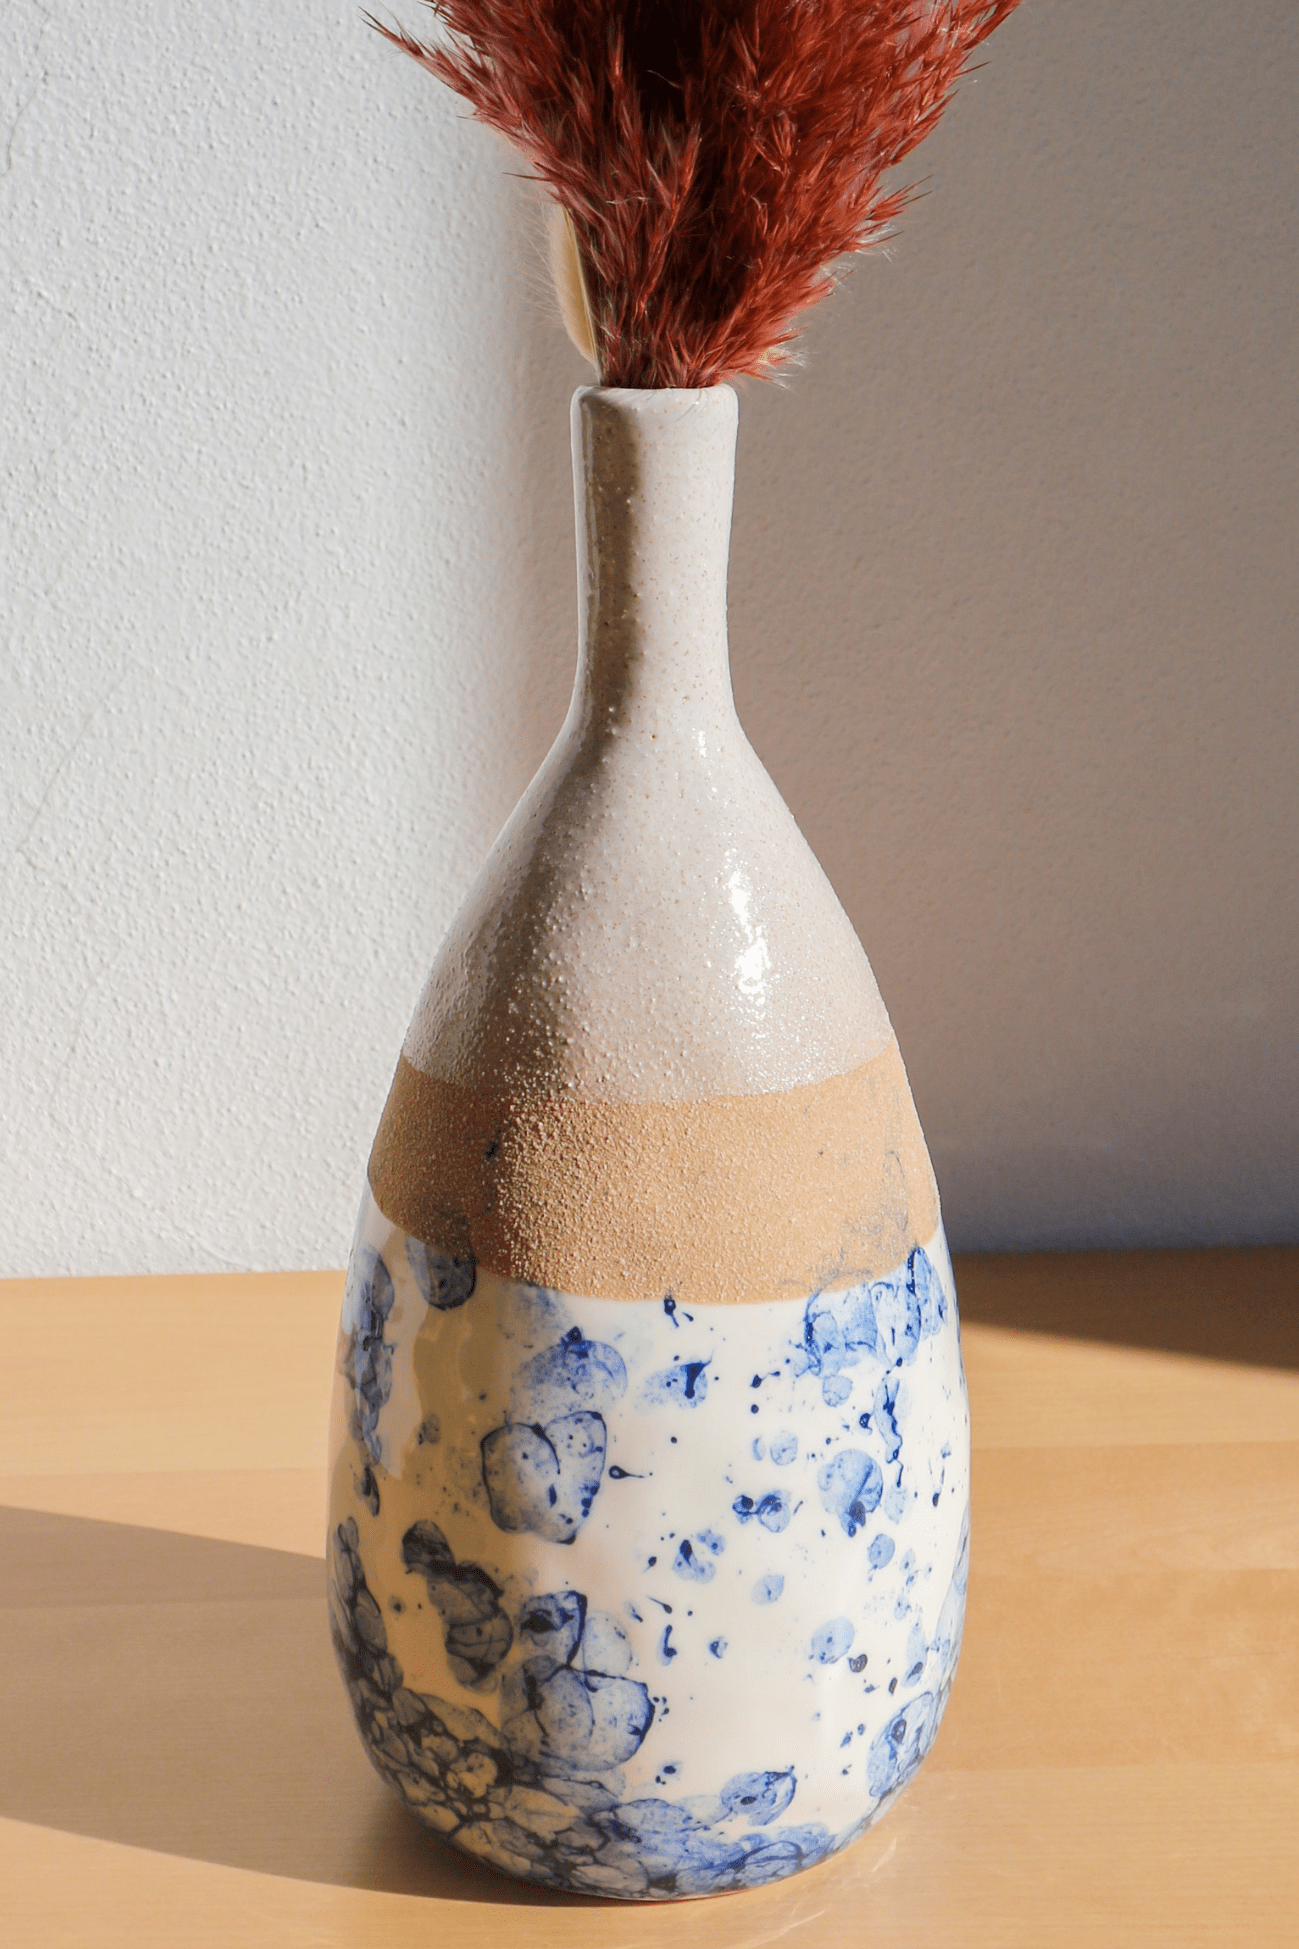 Item International Seki Seki - Vaso in porcellana in stile orientale con venature | Item International